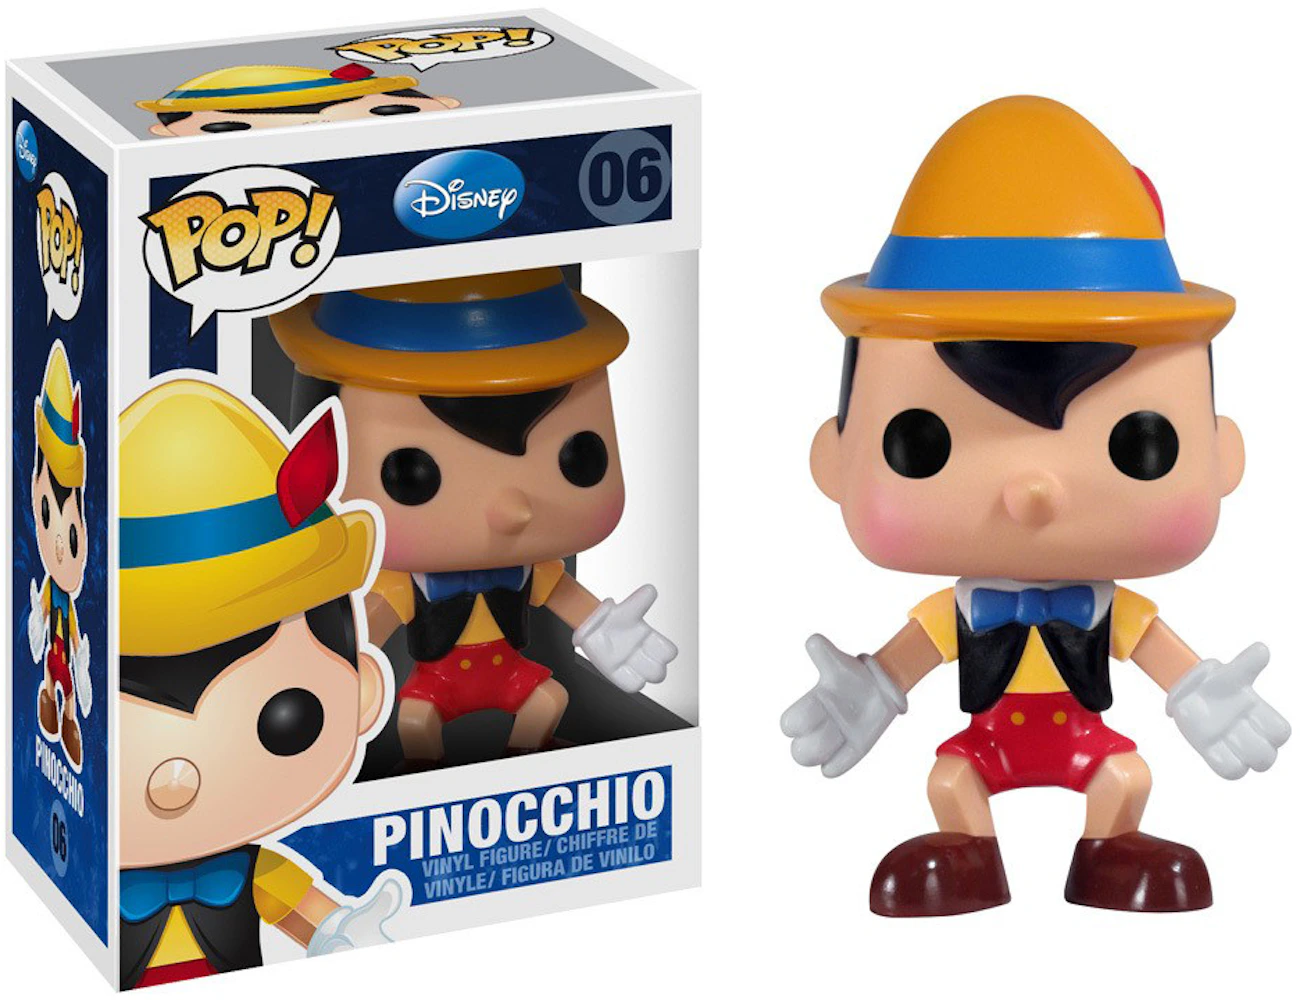 Funko Pop! Disney Pinocchio Figure - #06 US